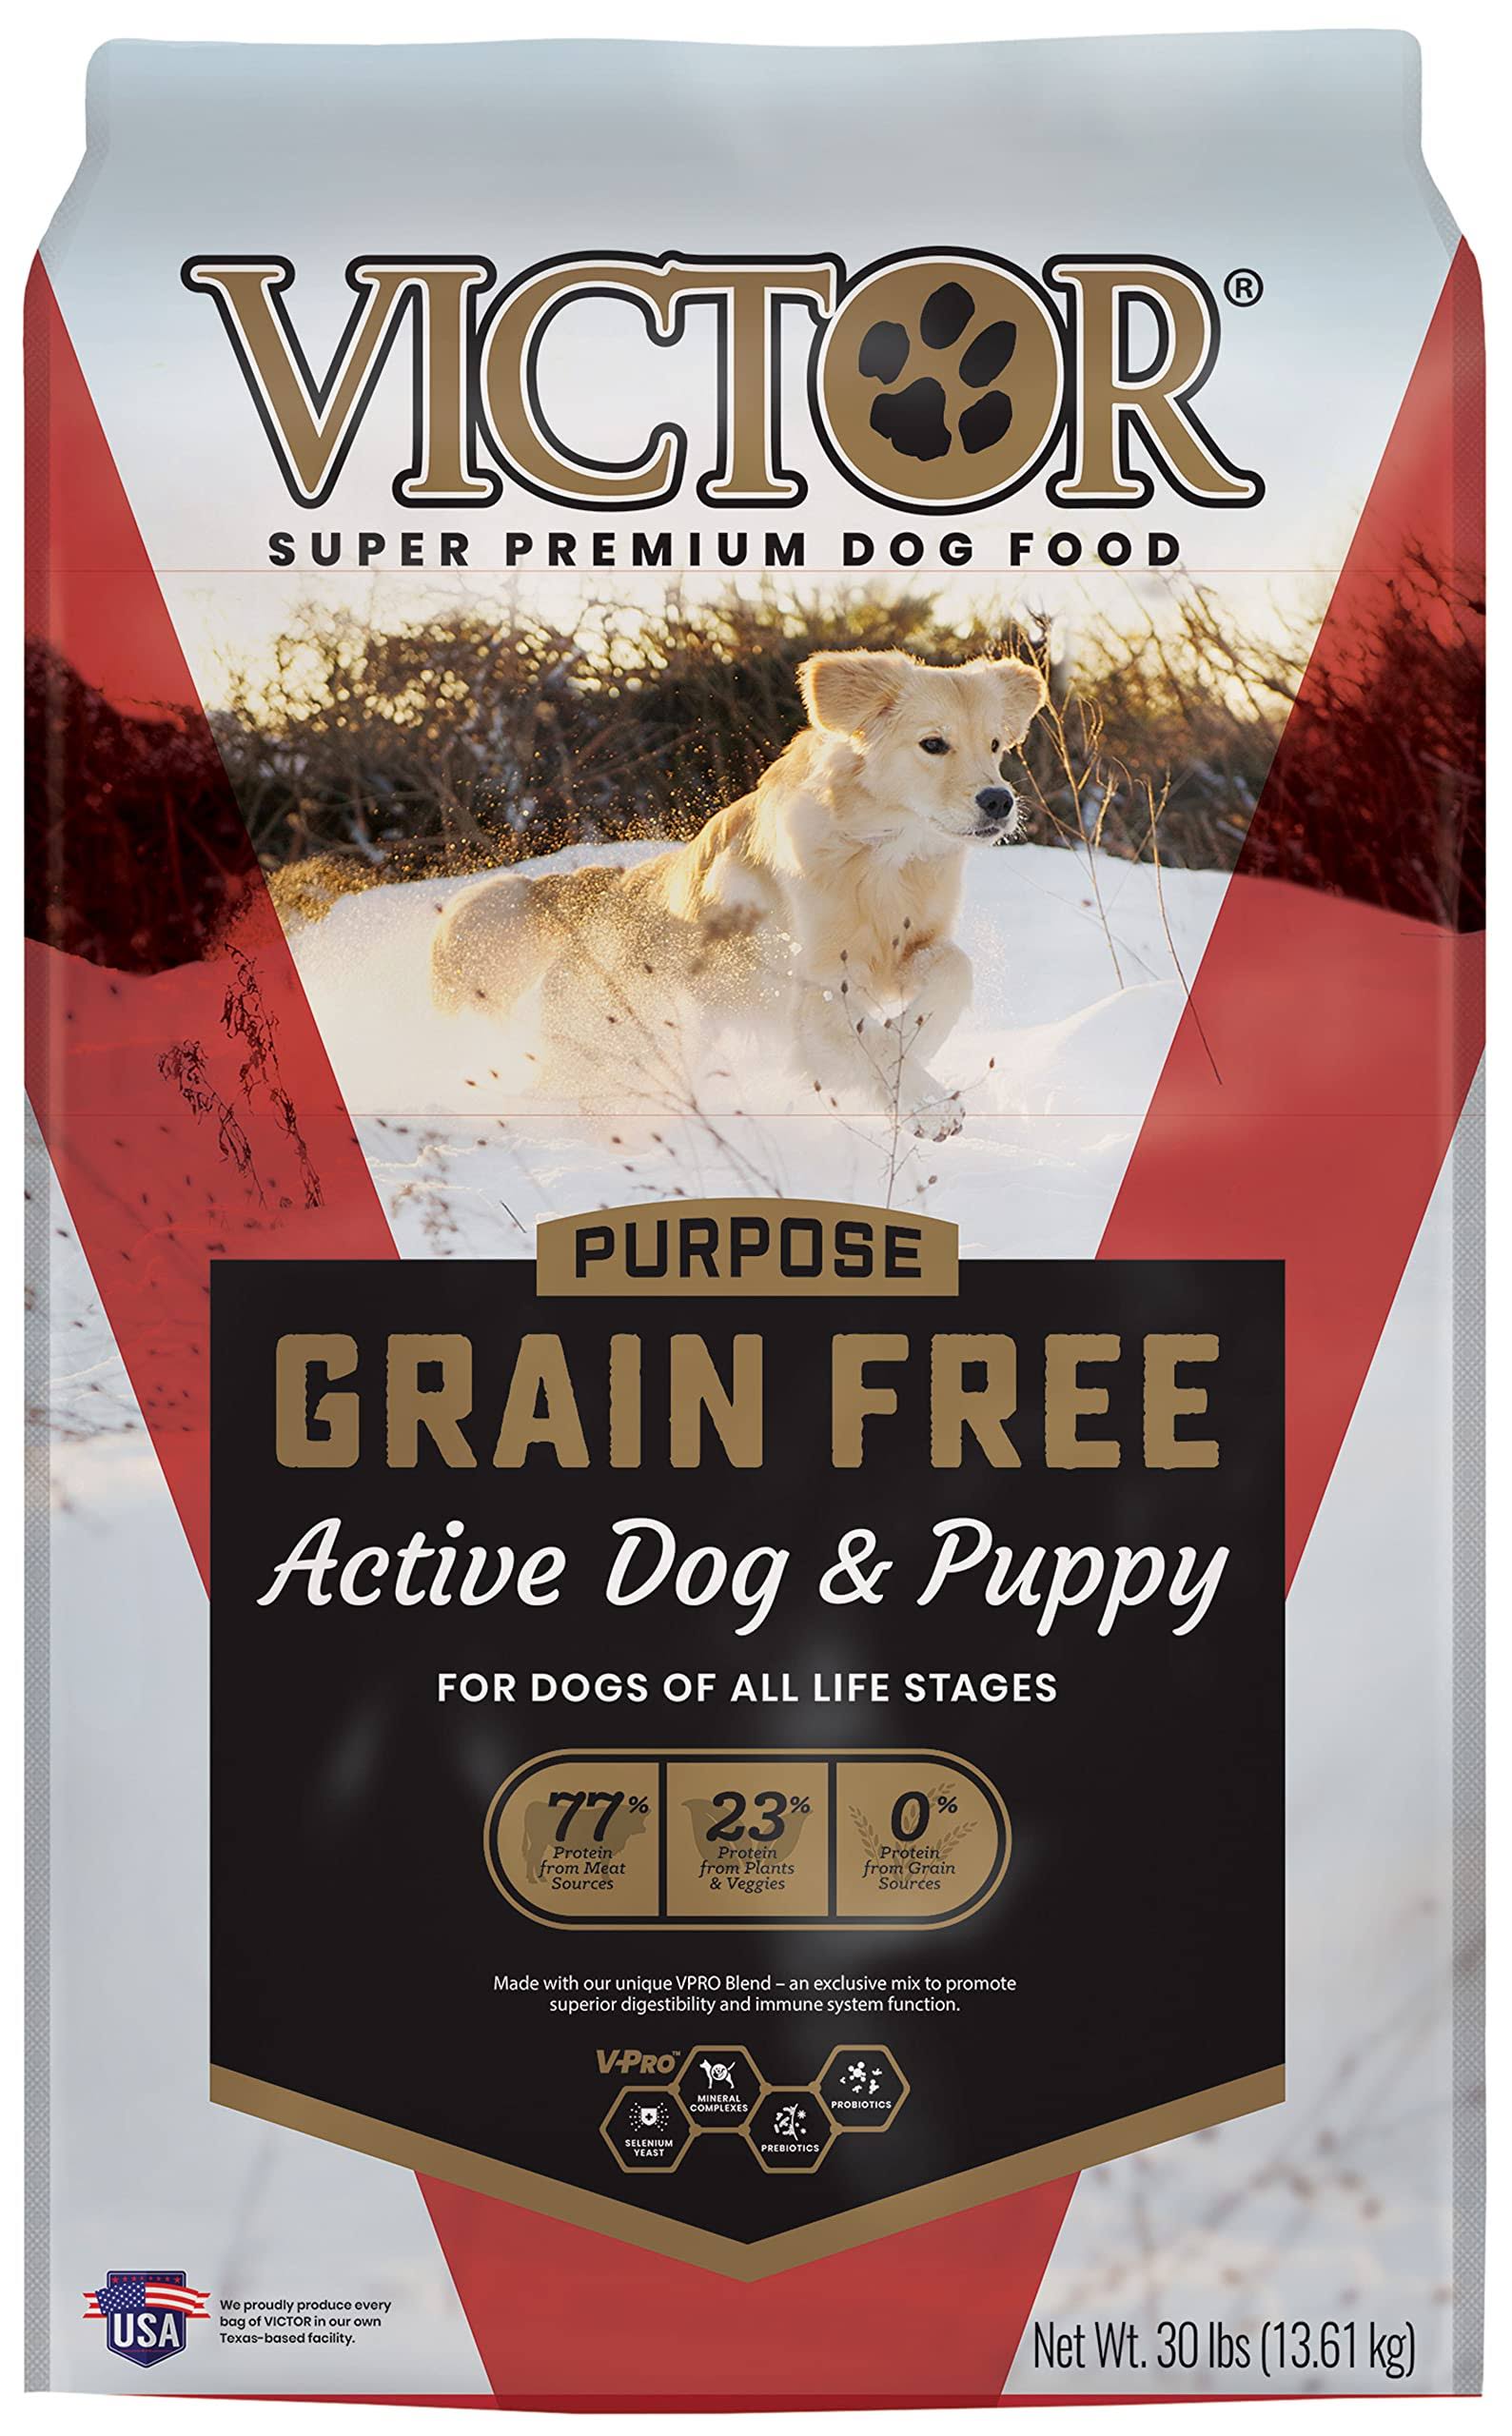 Victor Grain Free Dog Food